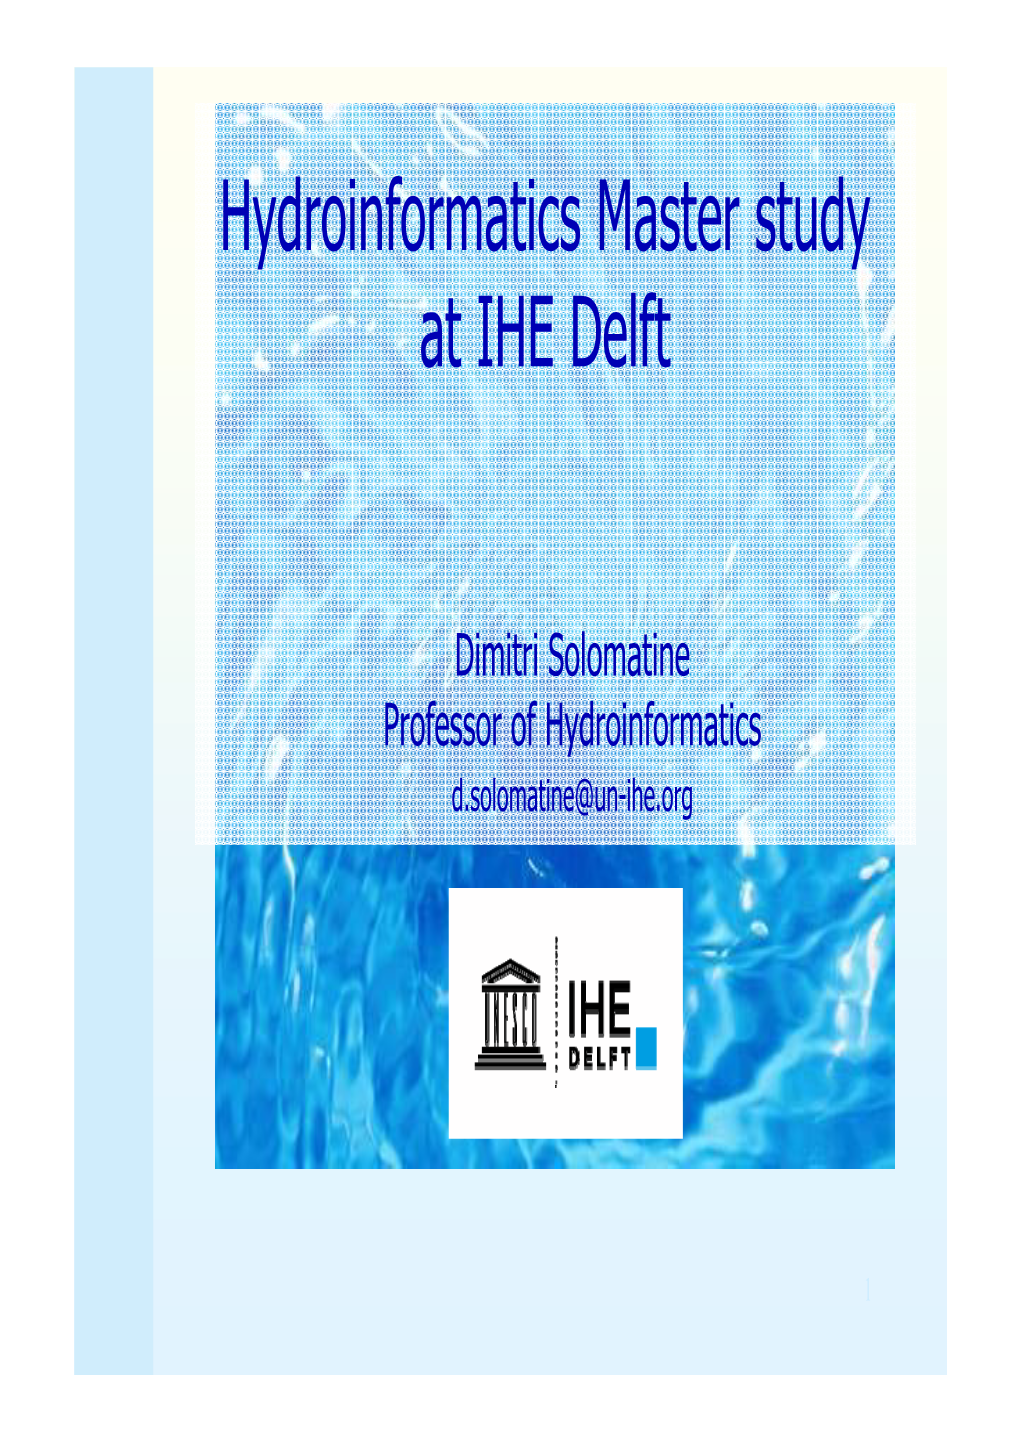 Hydroinformatics Master Study at IHE Delft